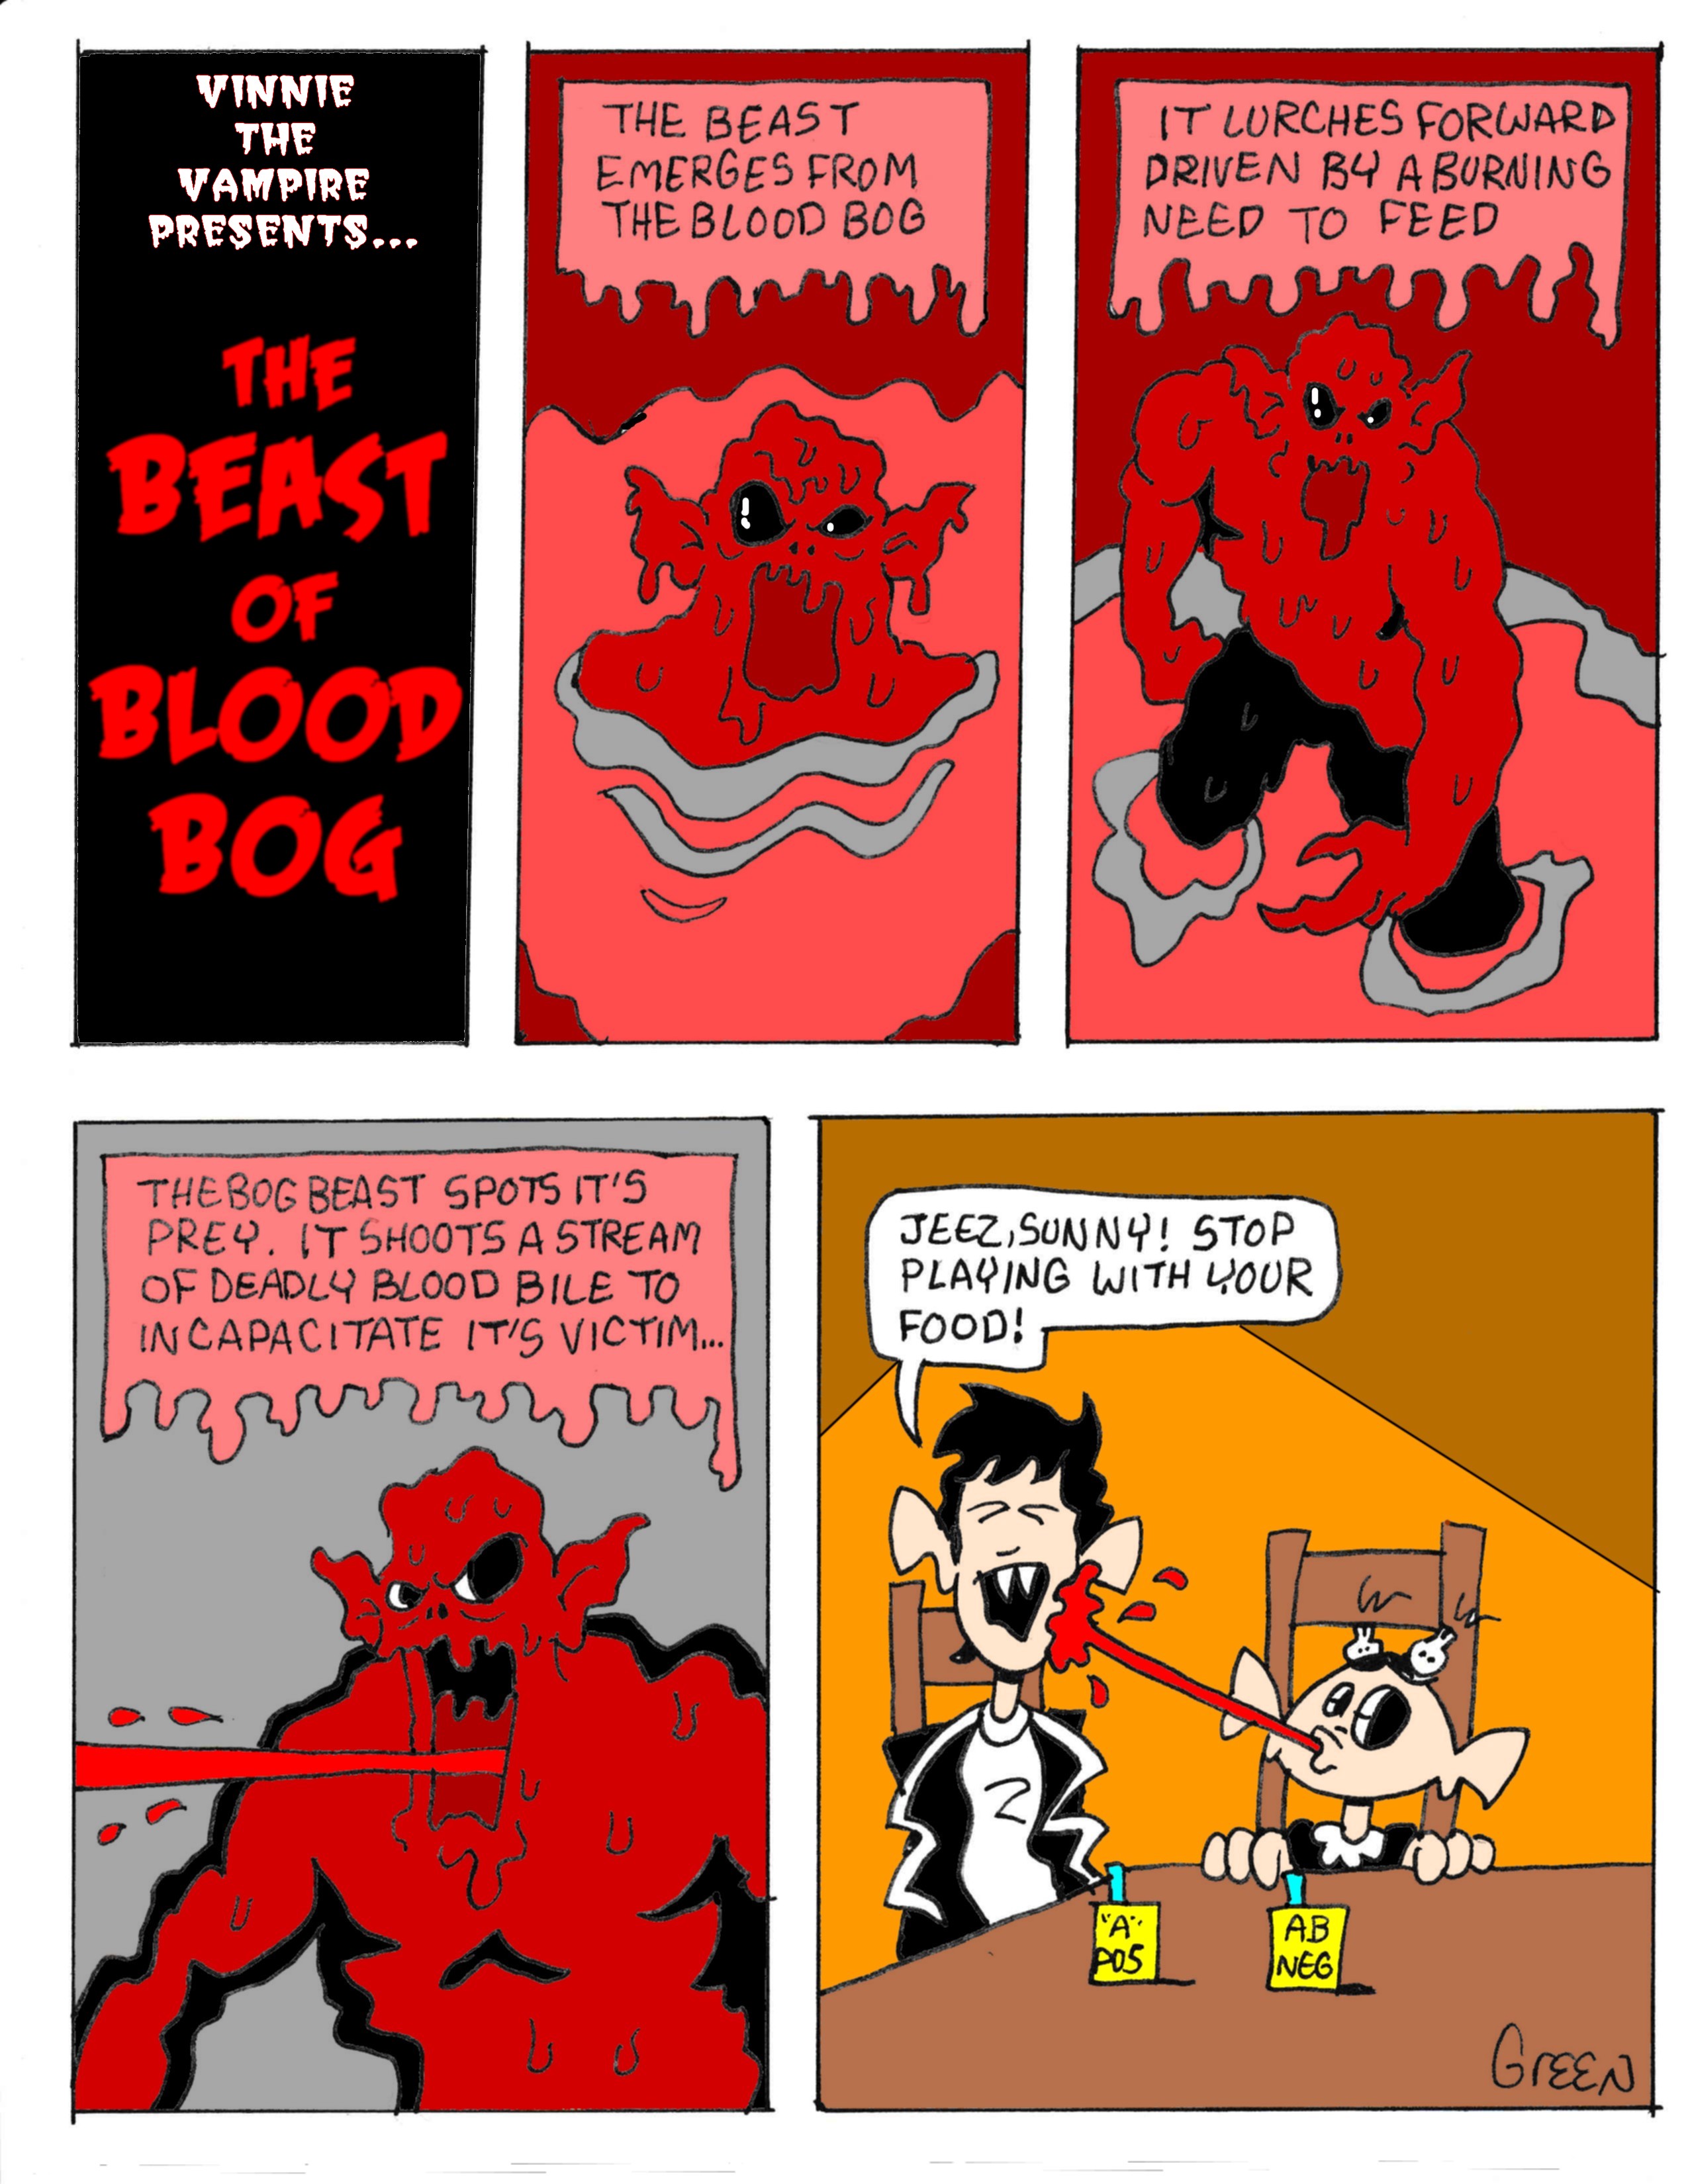 The Beast of Blood Bog